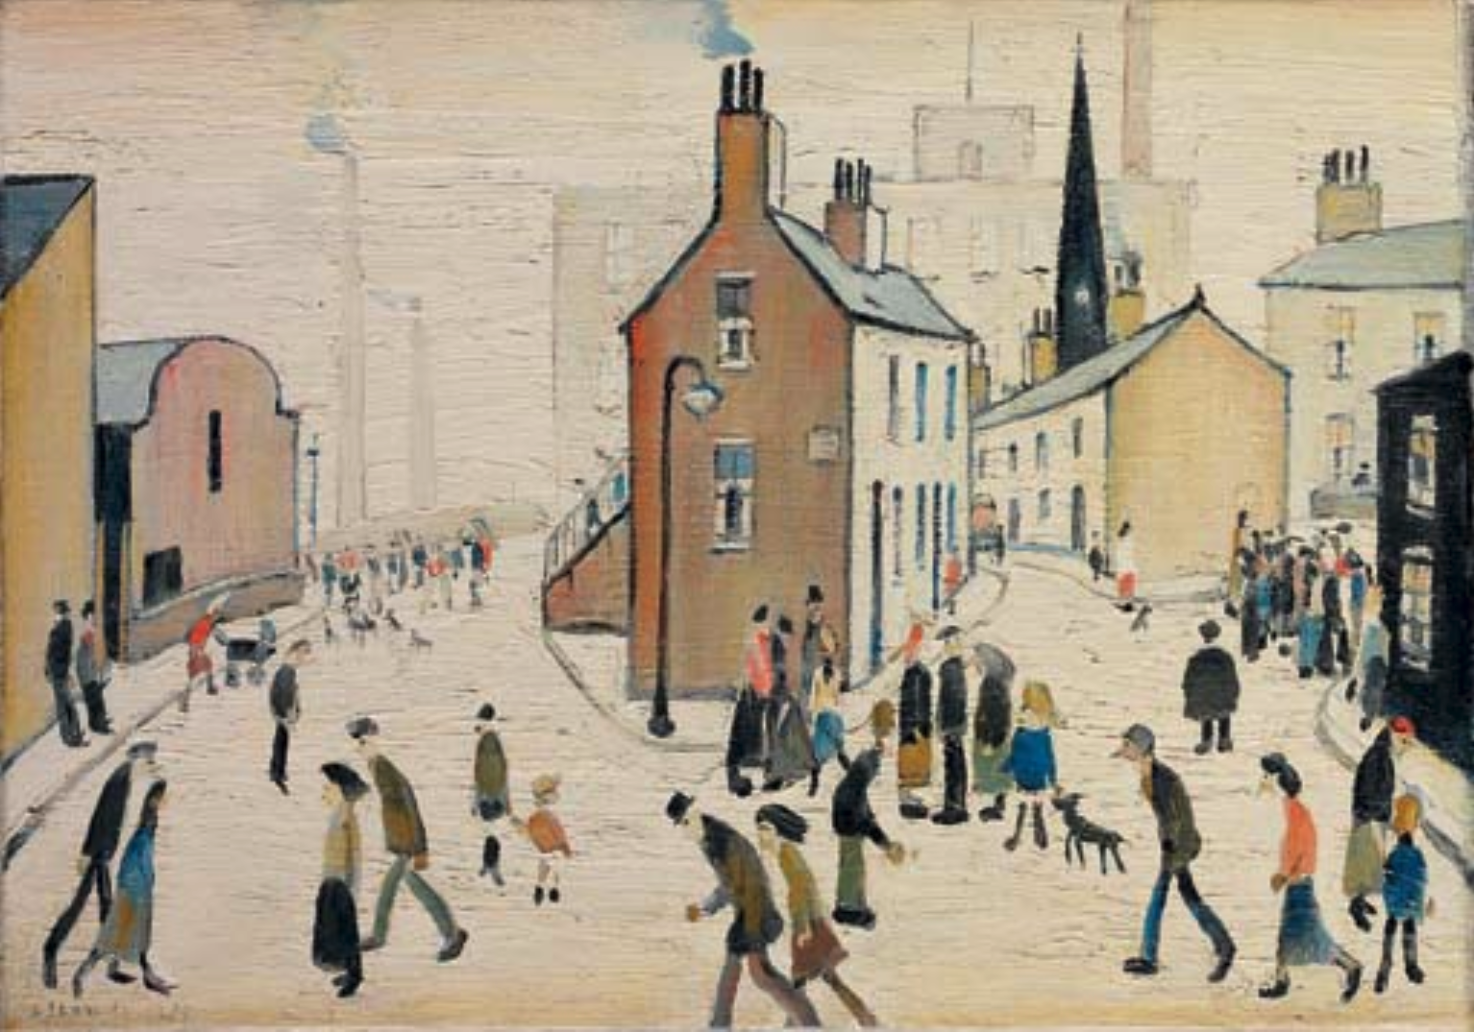 Street Scene (1957) by Laurence Stephen Lowry (1887 - 1976), English artist.